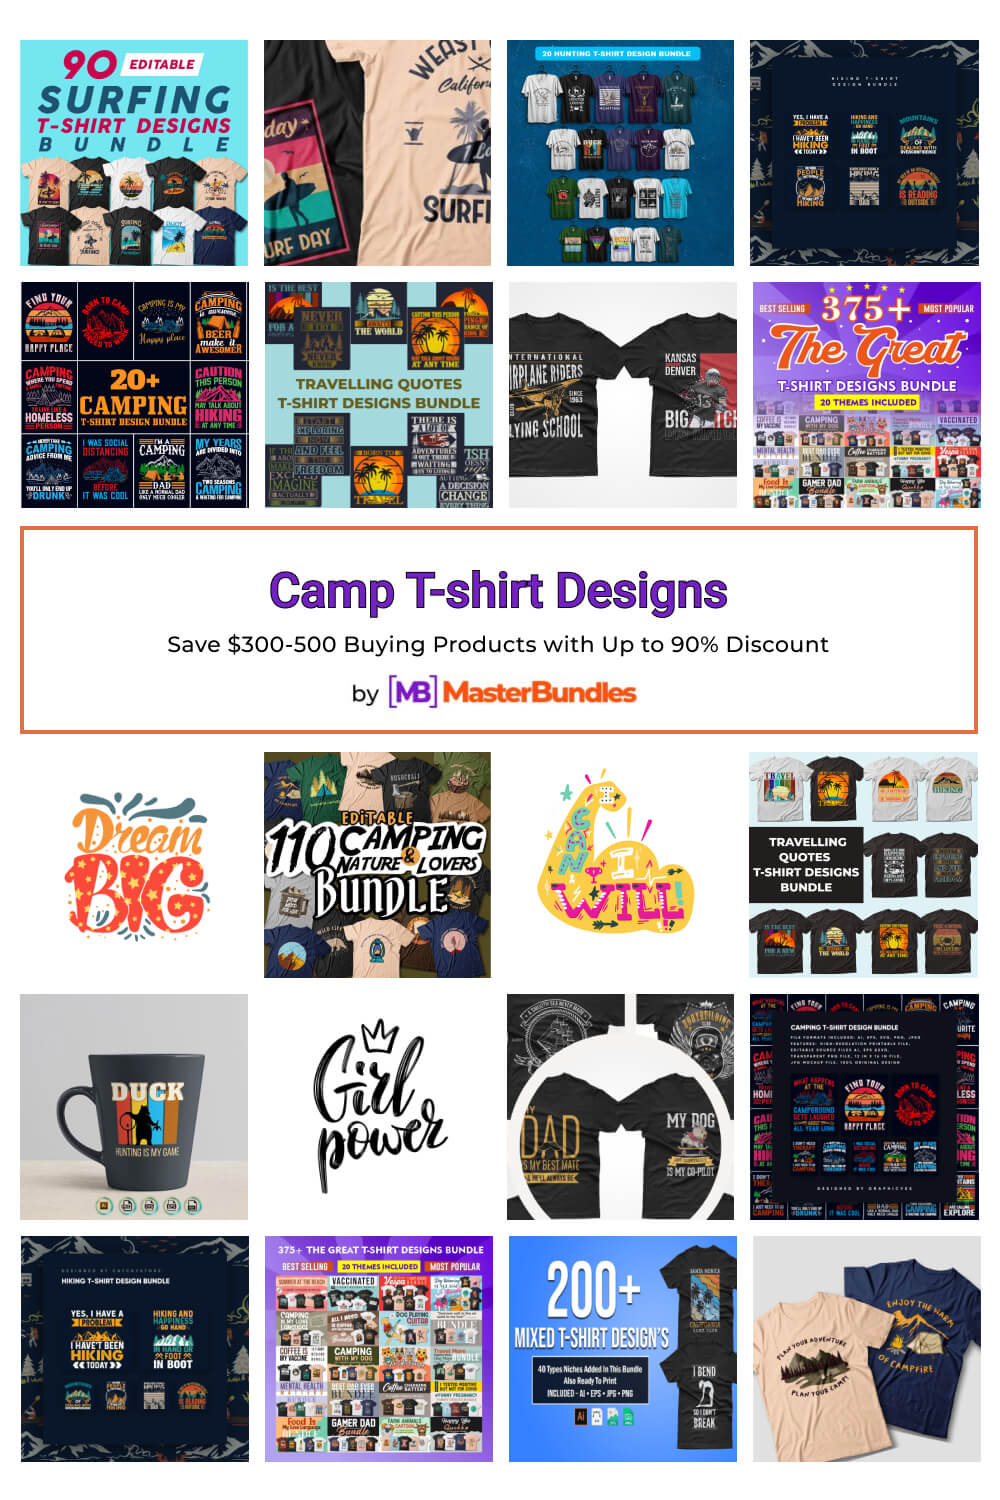 camp t shirt designs pinterest image.